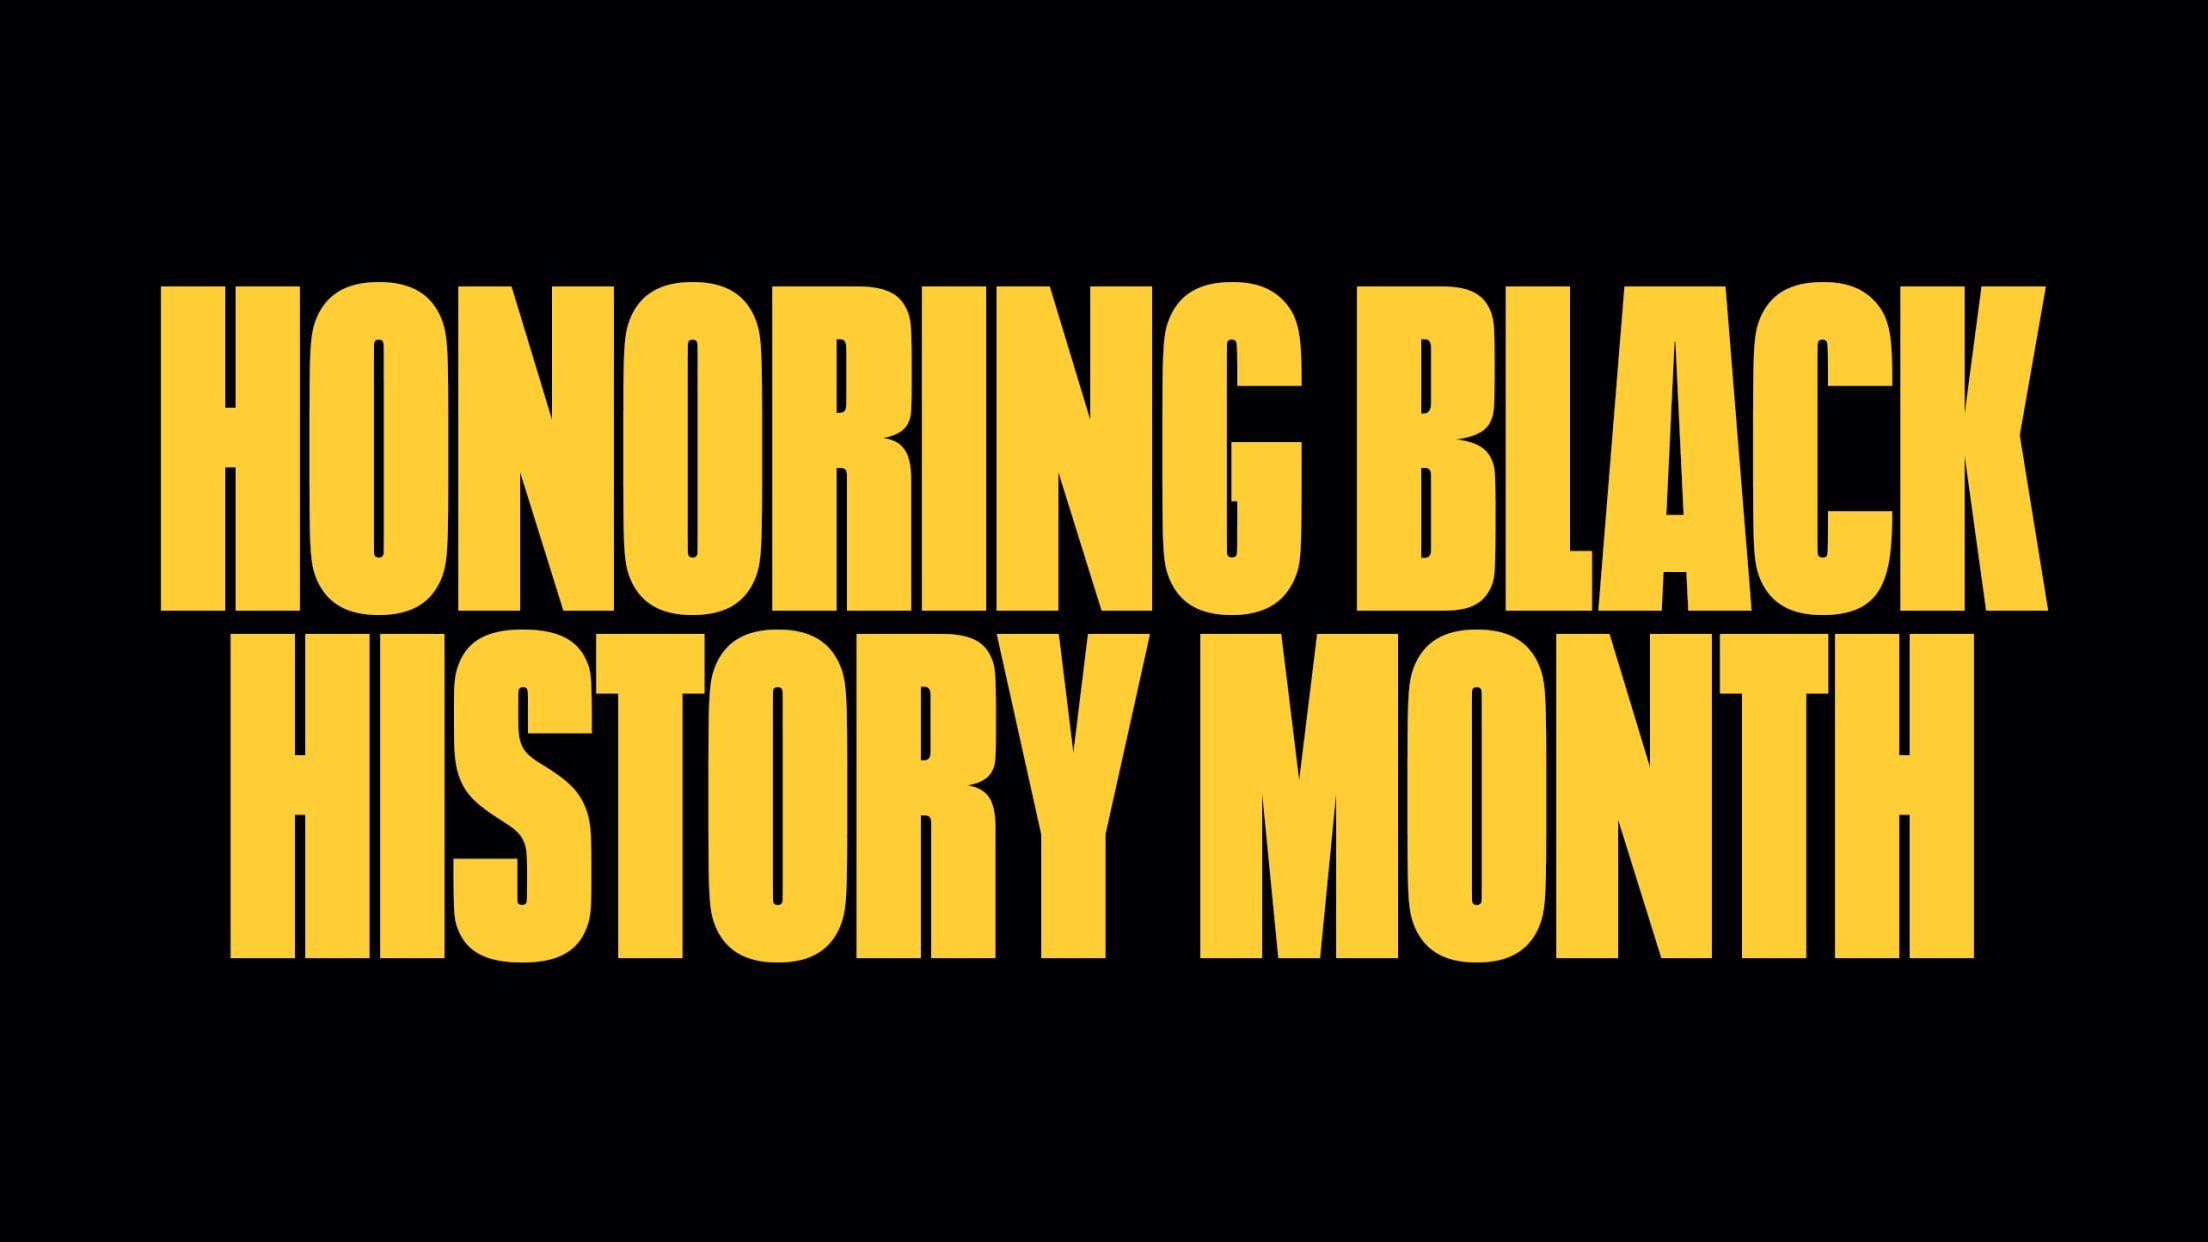 Kansas City Athletics - Honoring Black History Month, the Kansas